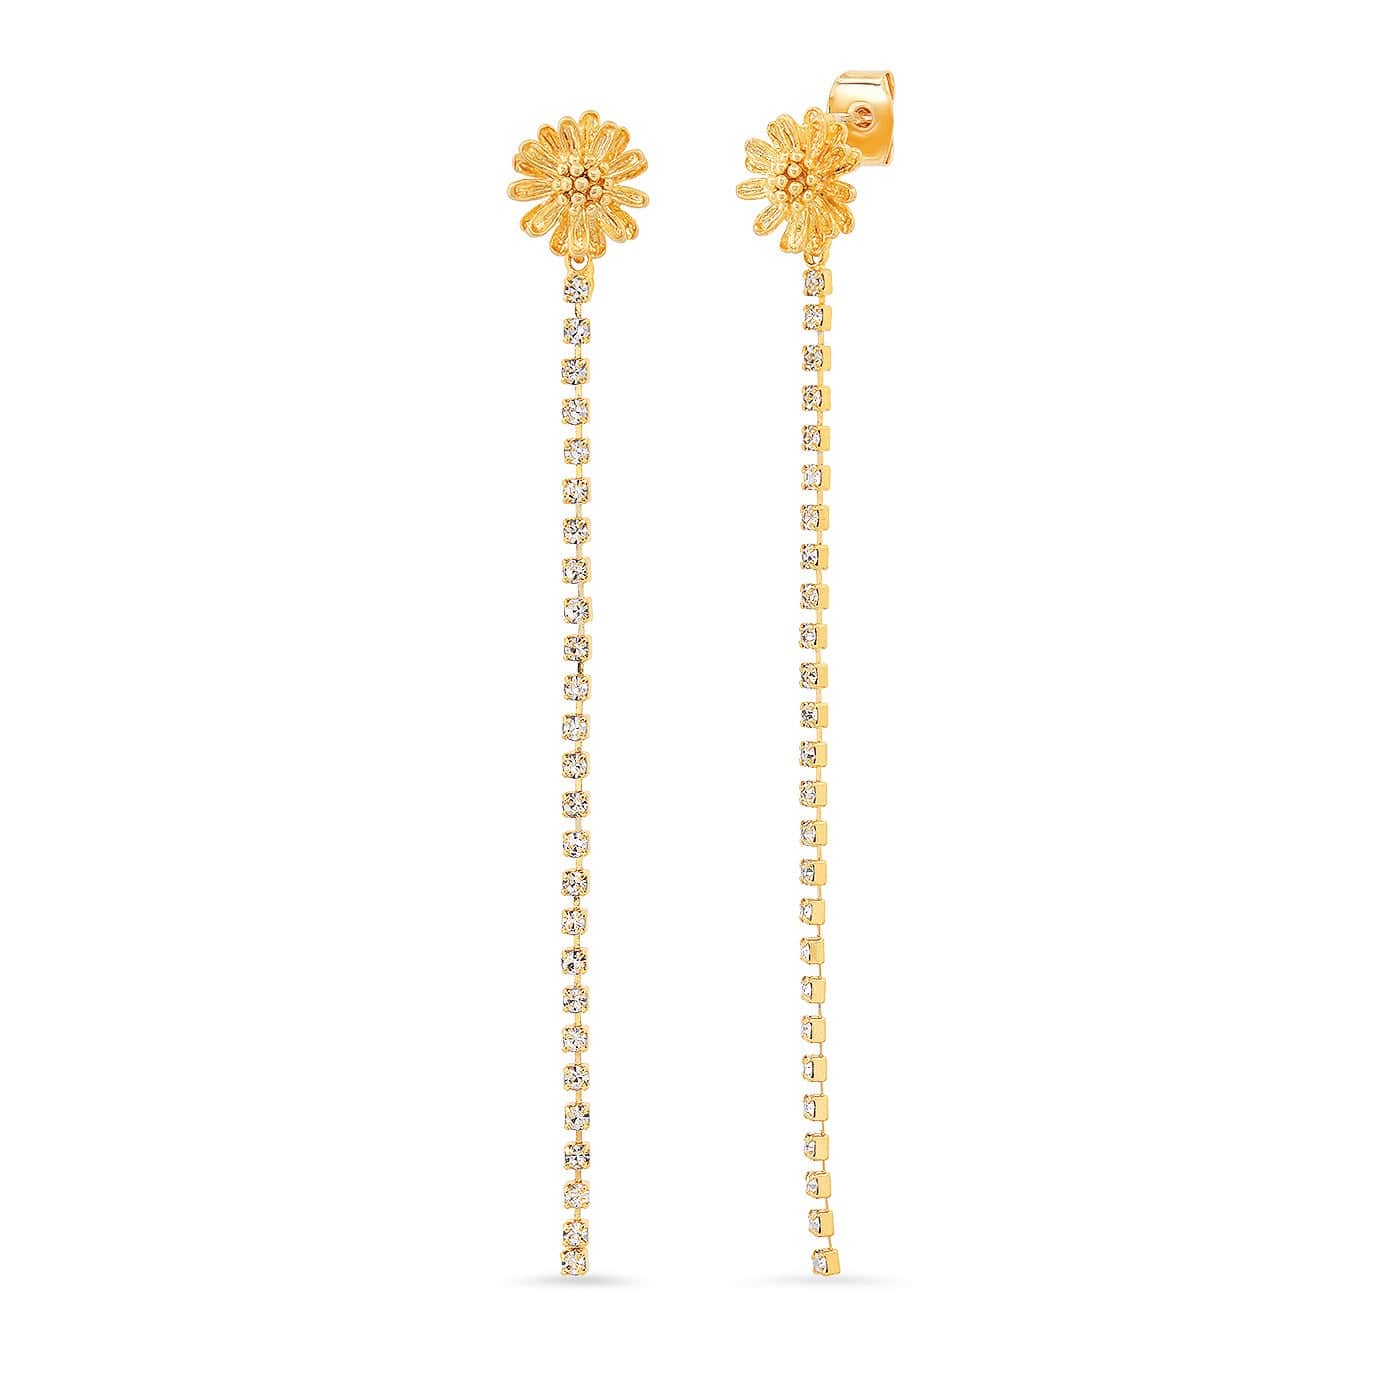 TAI JEWELRY Earrings Flower Studs with CZ Linear Drop